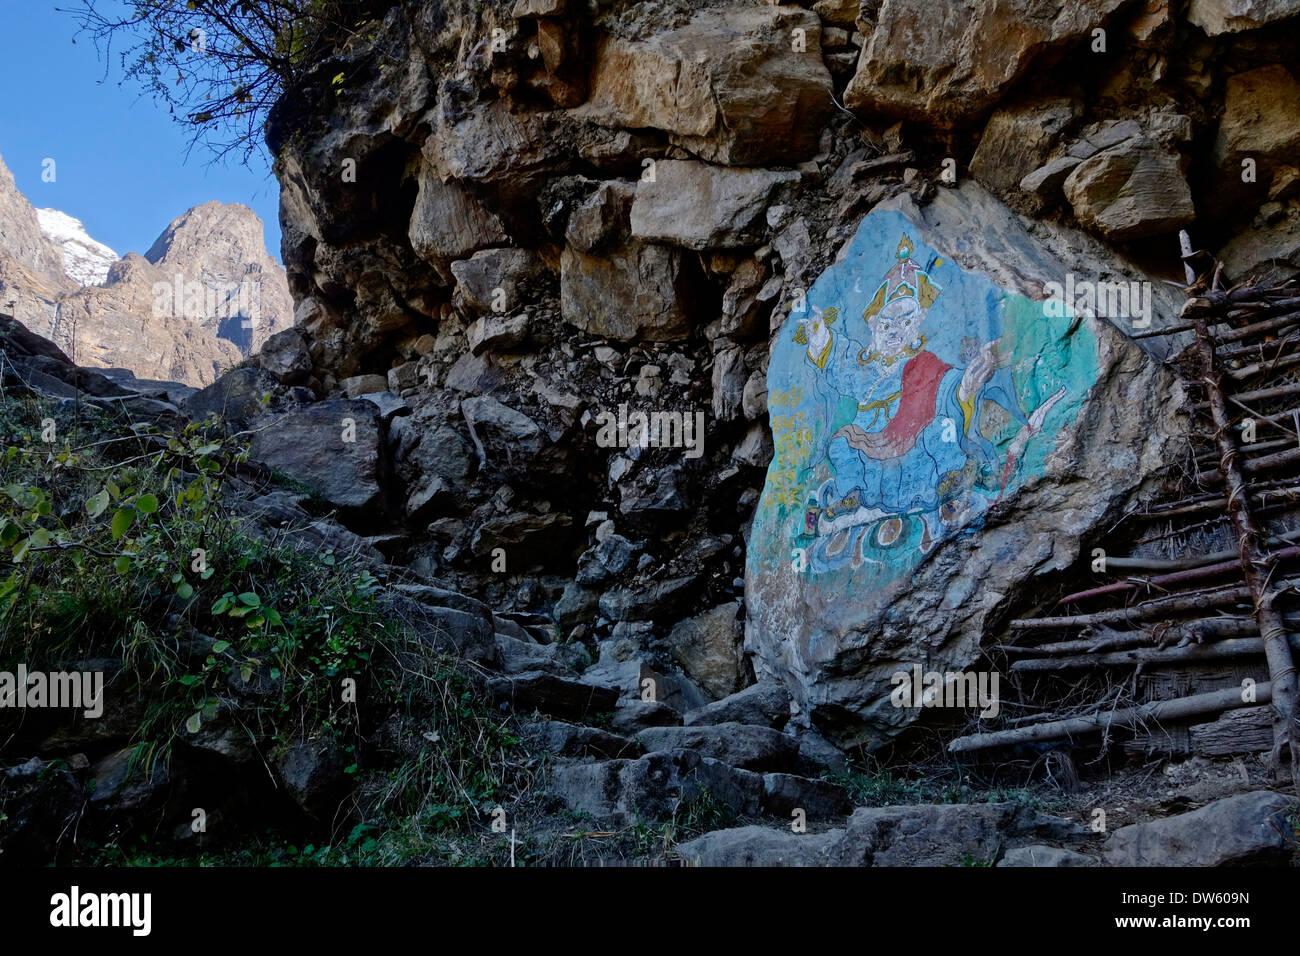 Painted boulder in the Mansslu region of Nepal. Stock Photo